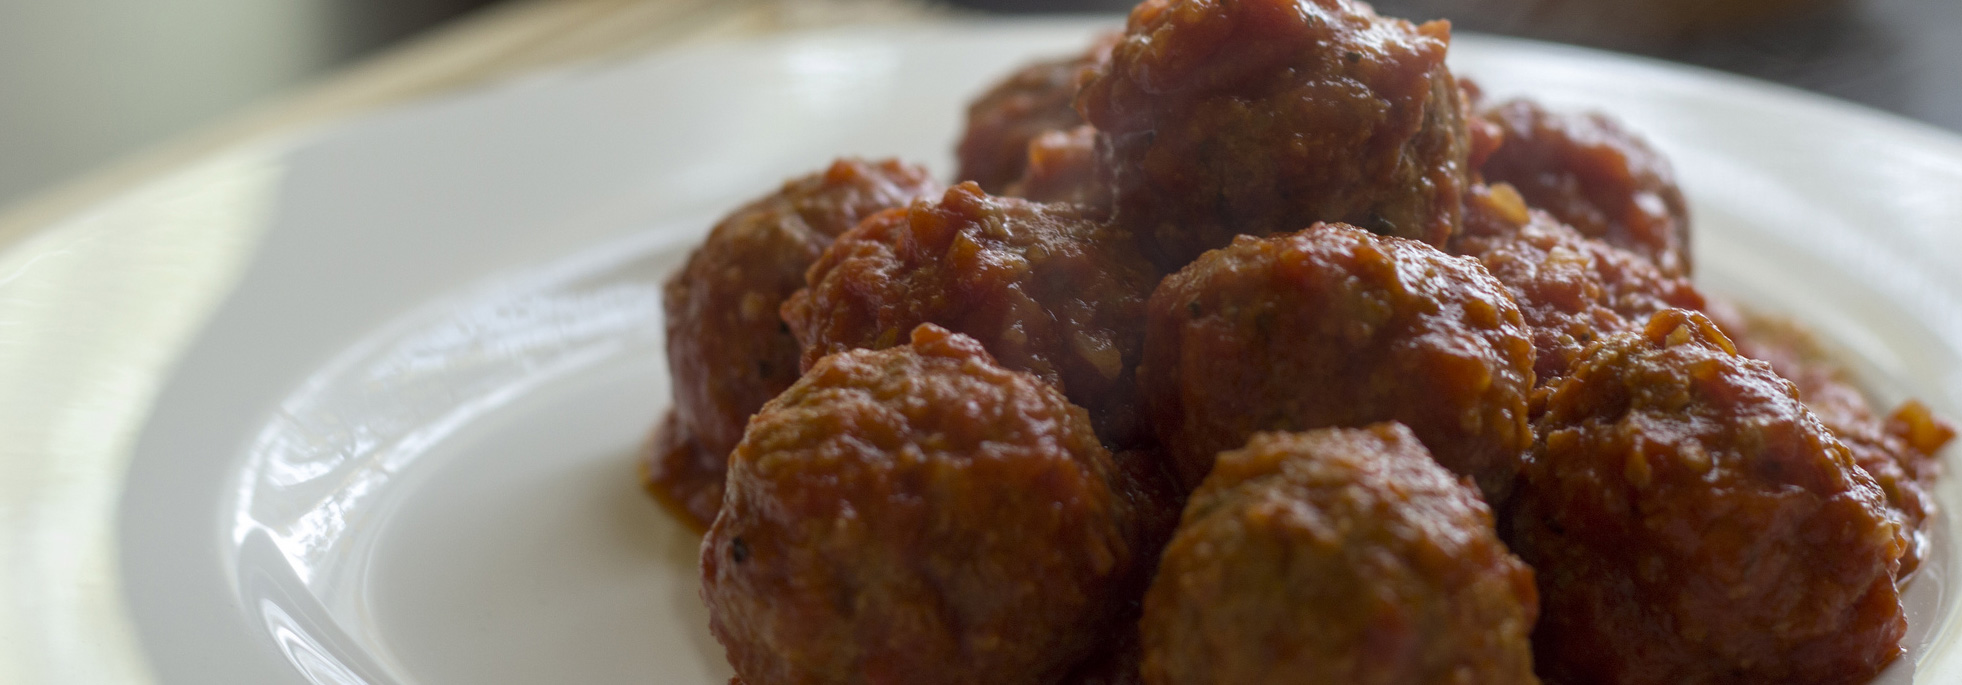 Meatball Provençale